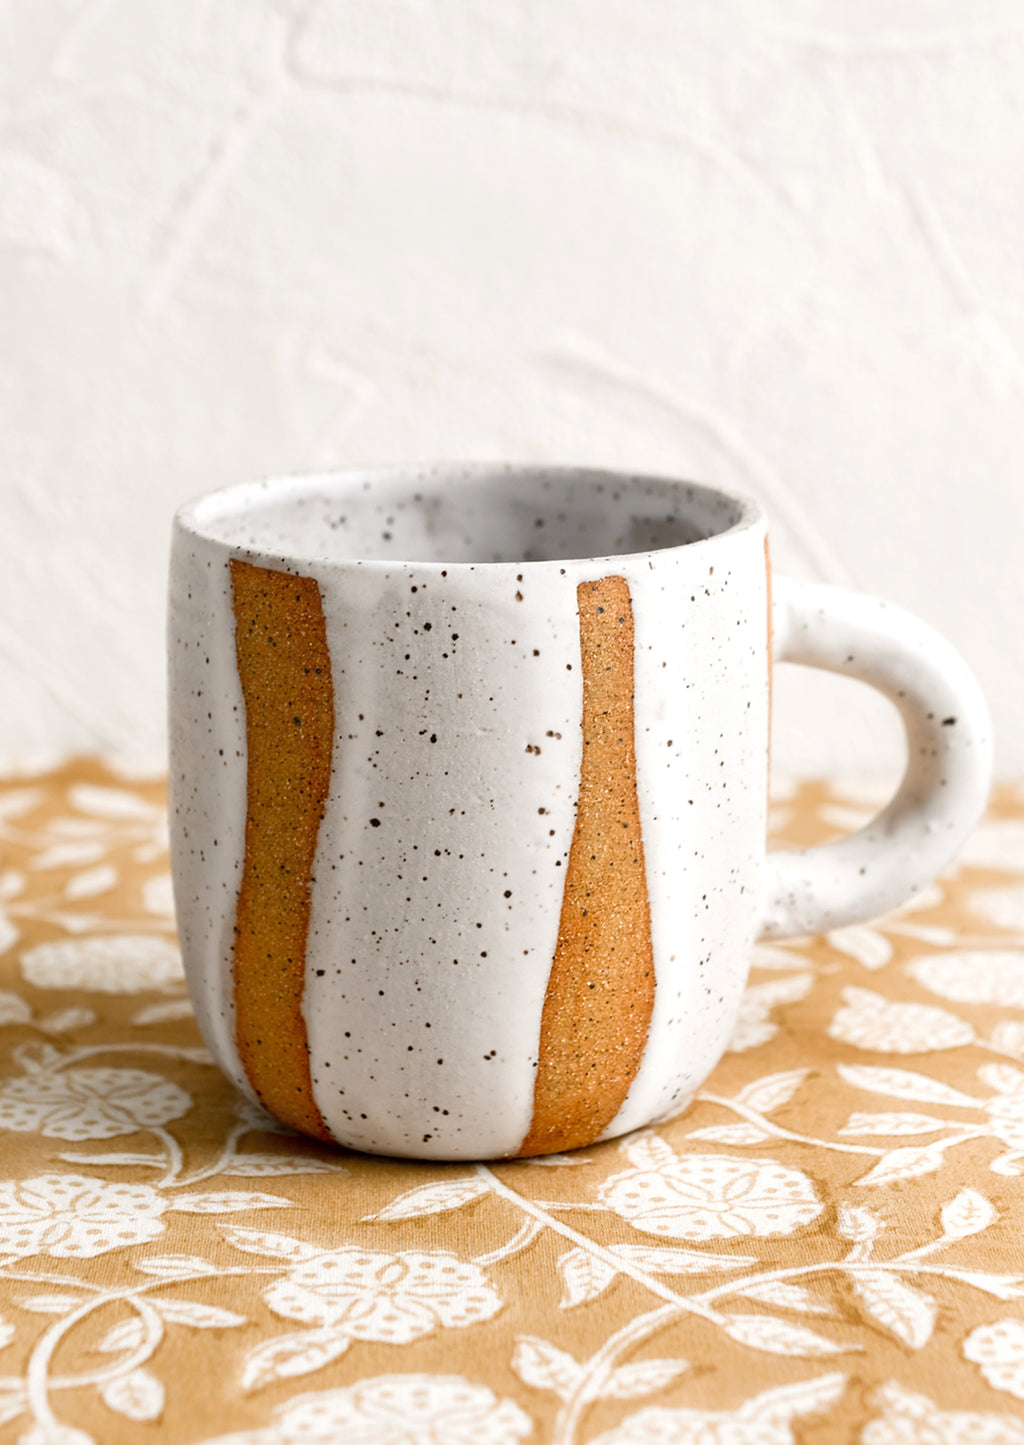 White Speckle: A ceramic mug with wavy stripe pattern in white.